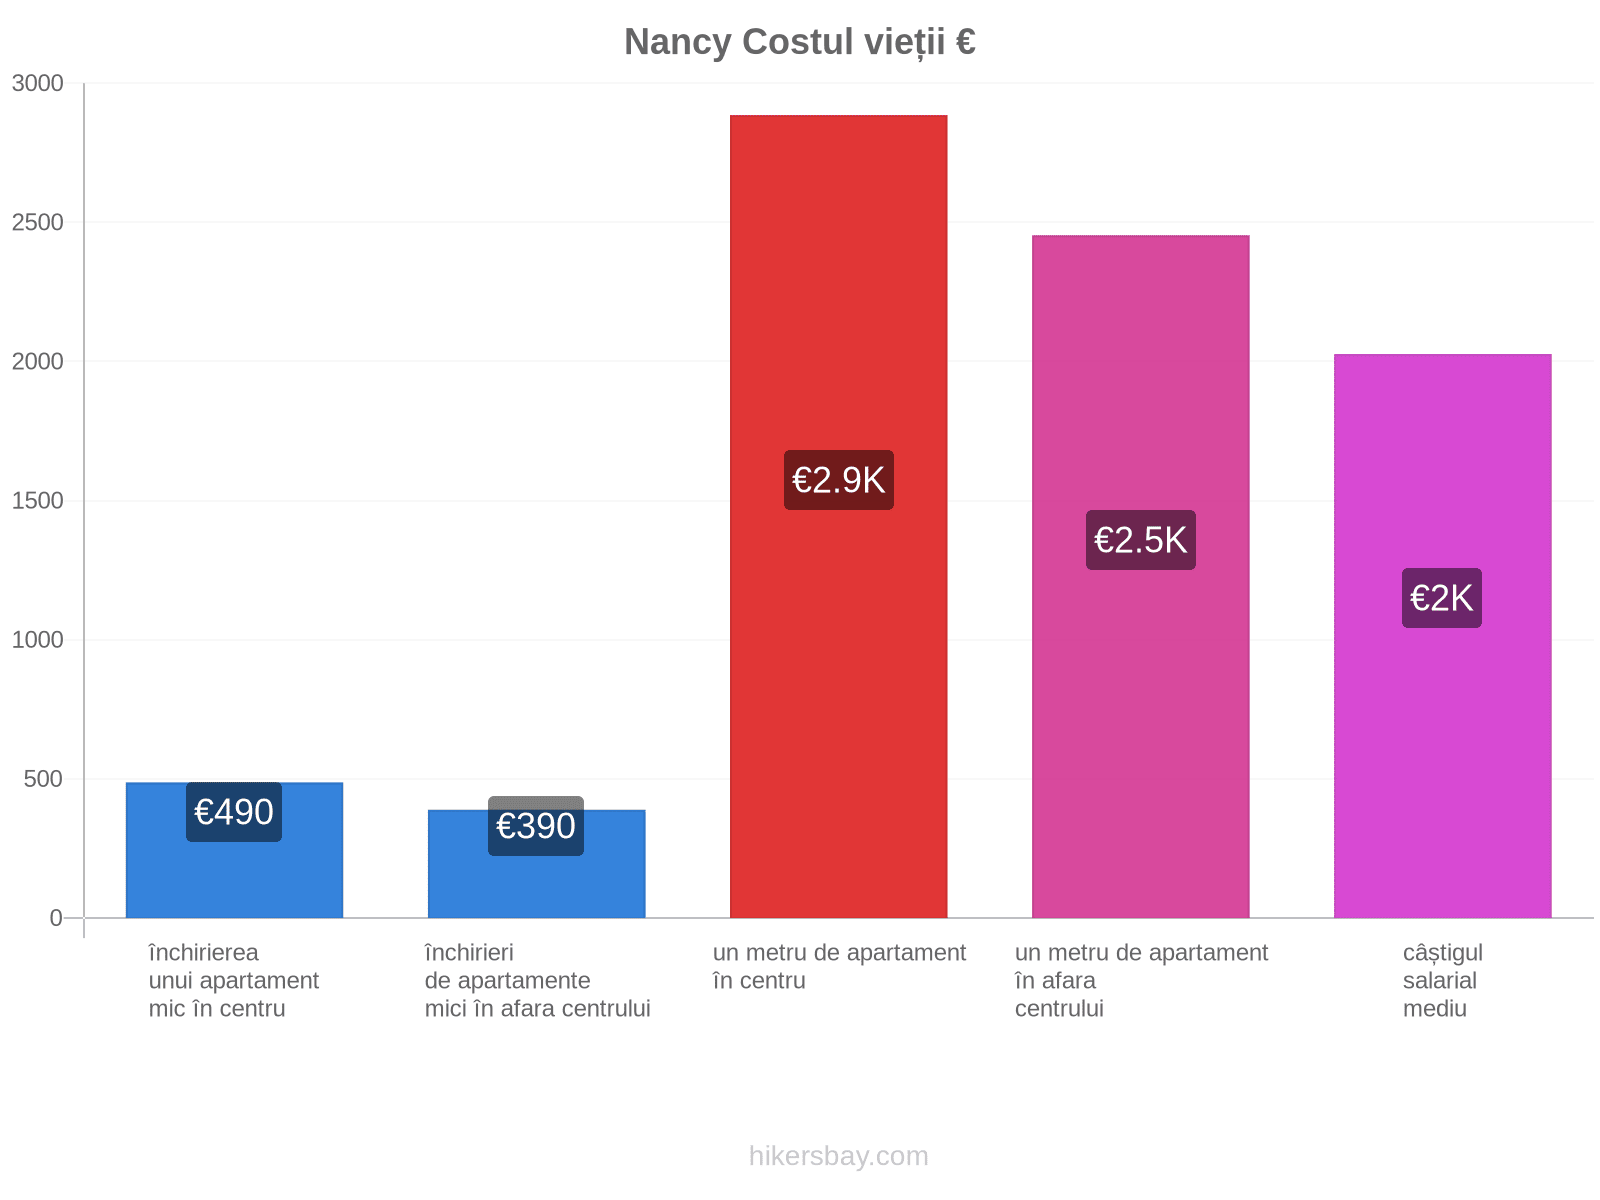 Nancy costul vieții hikersbay.com